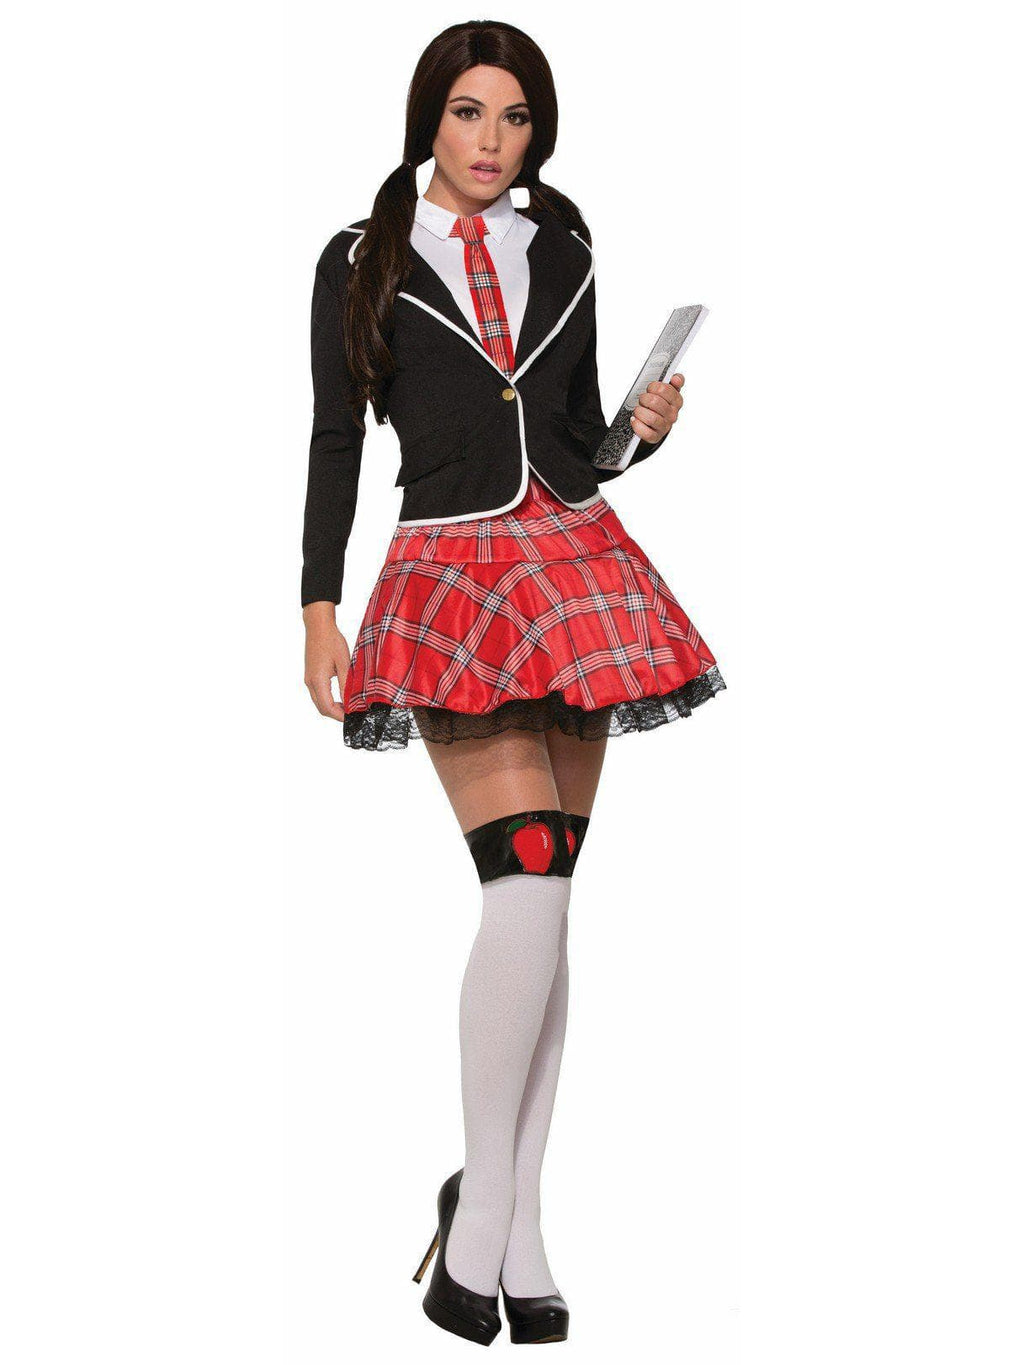 Adult Sexy Prep School Girl Costume